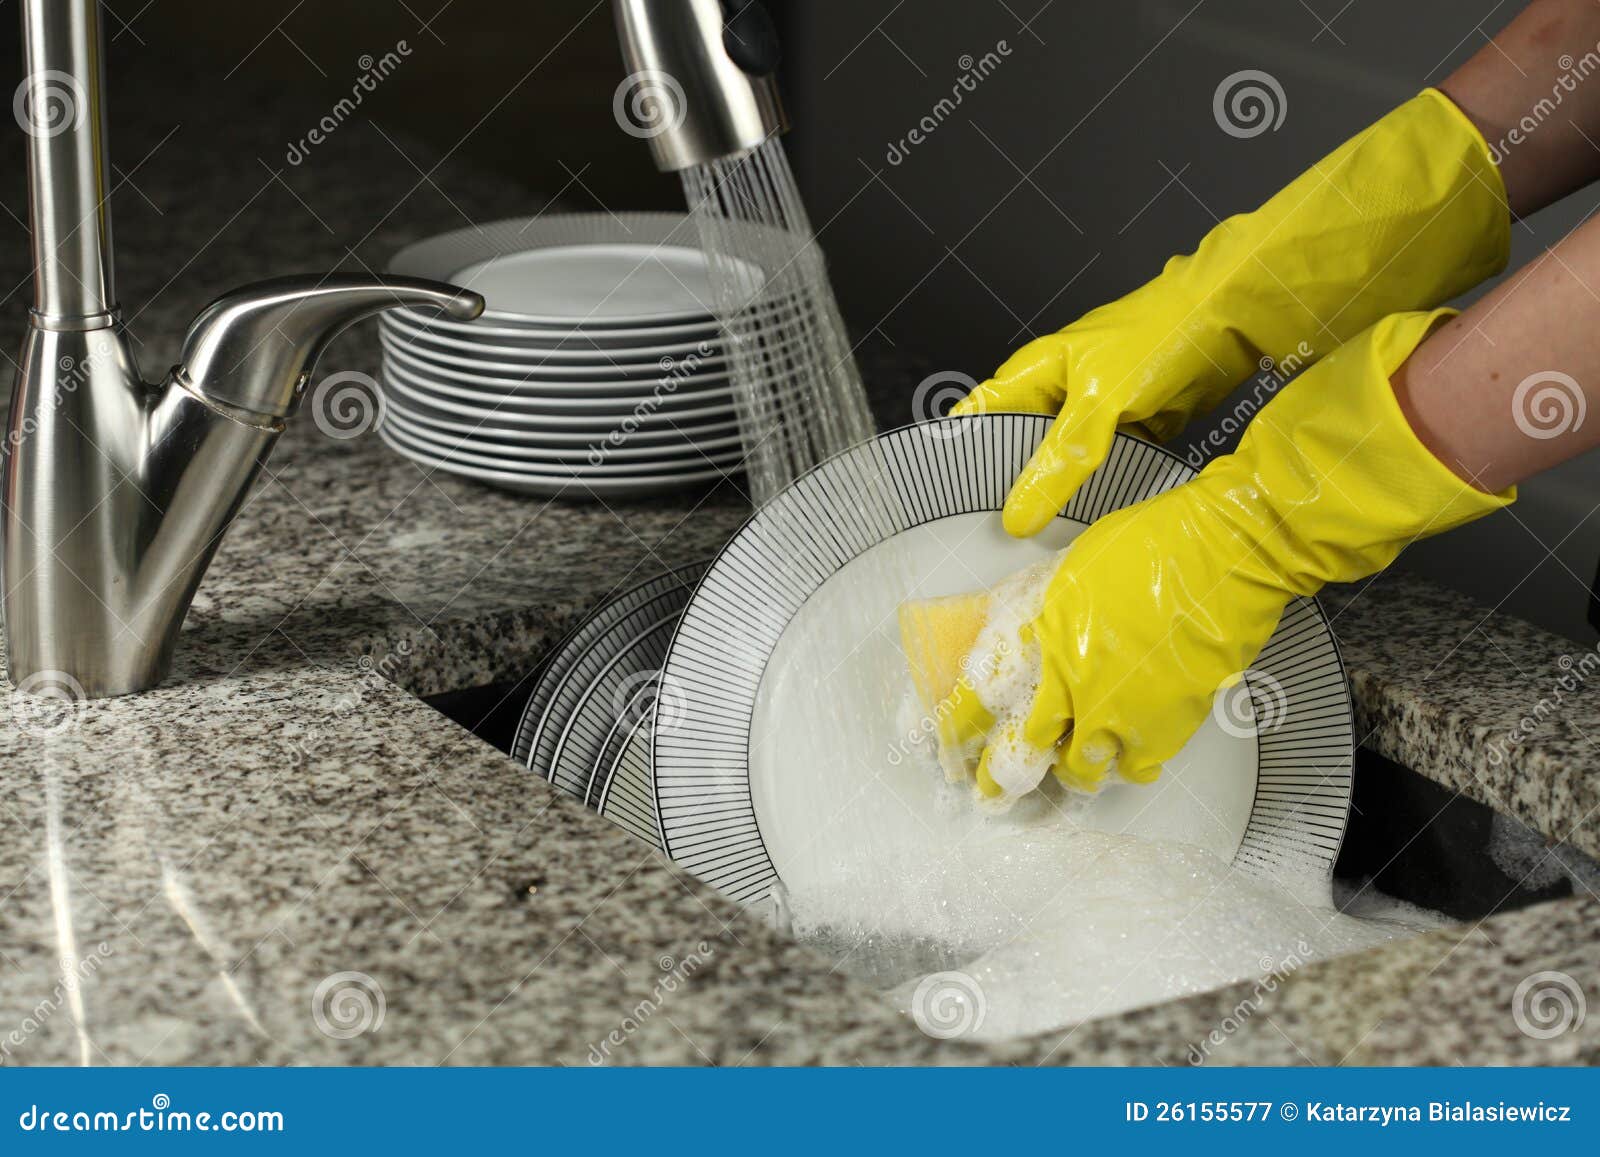 washing a plates